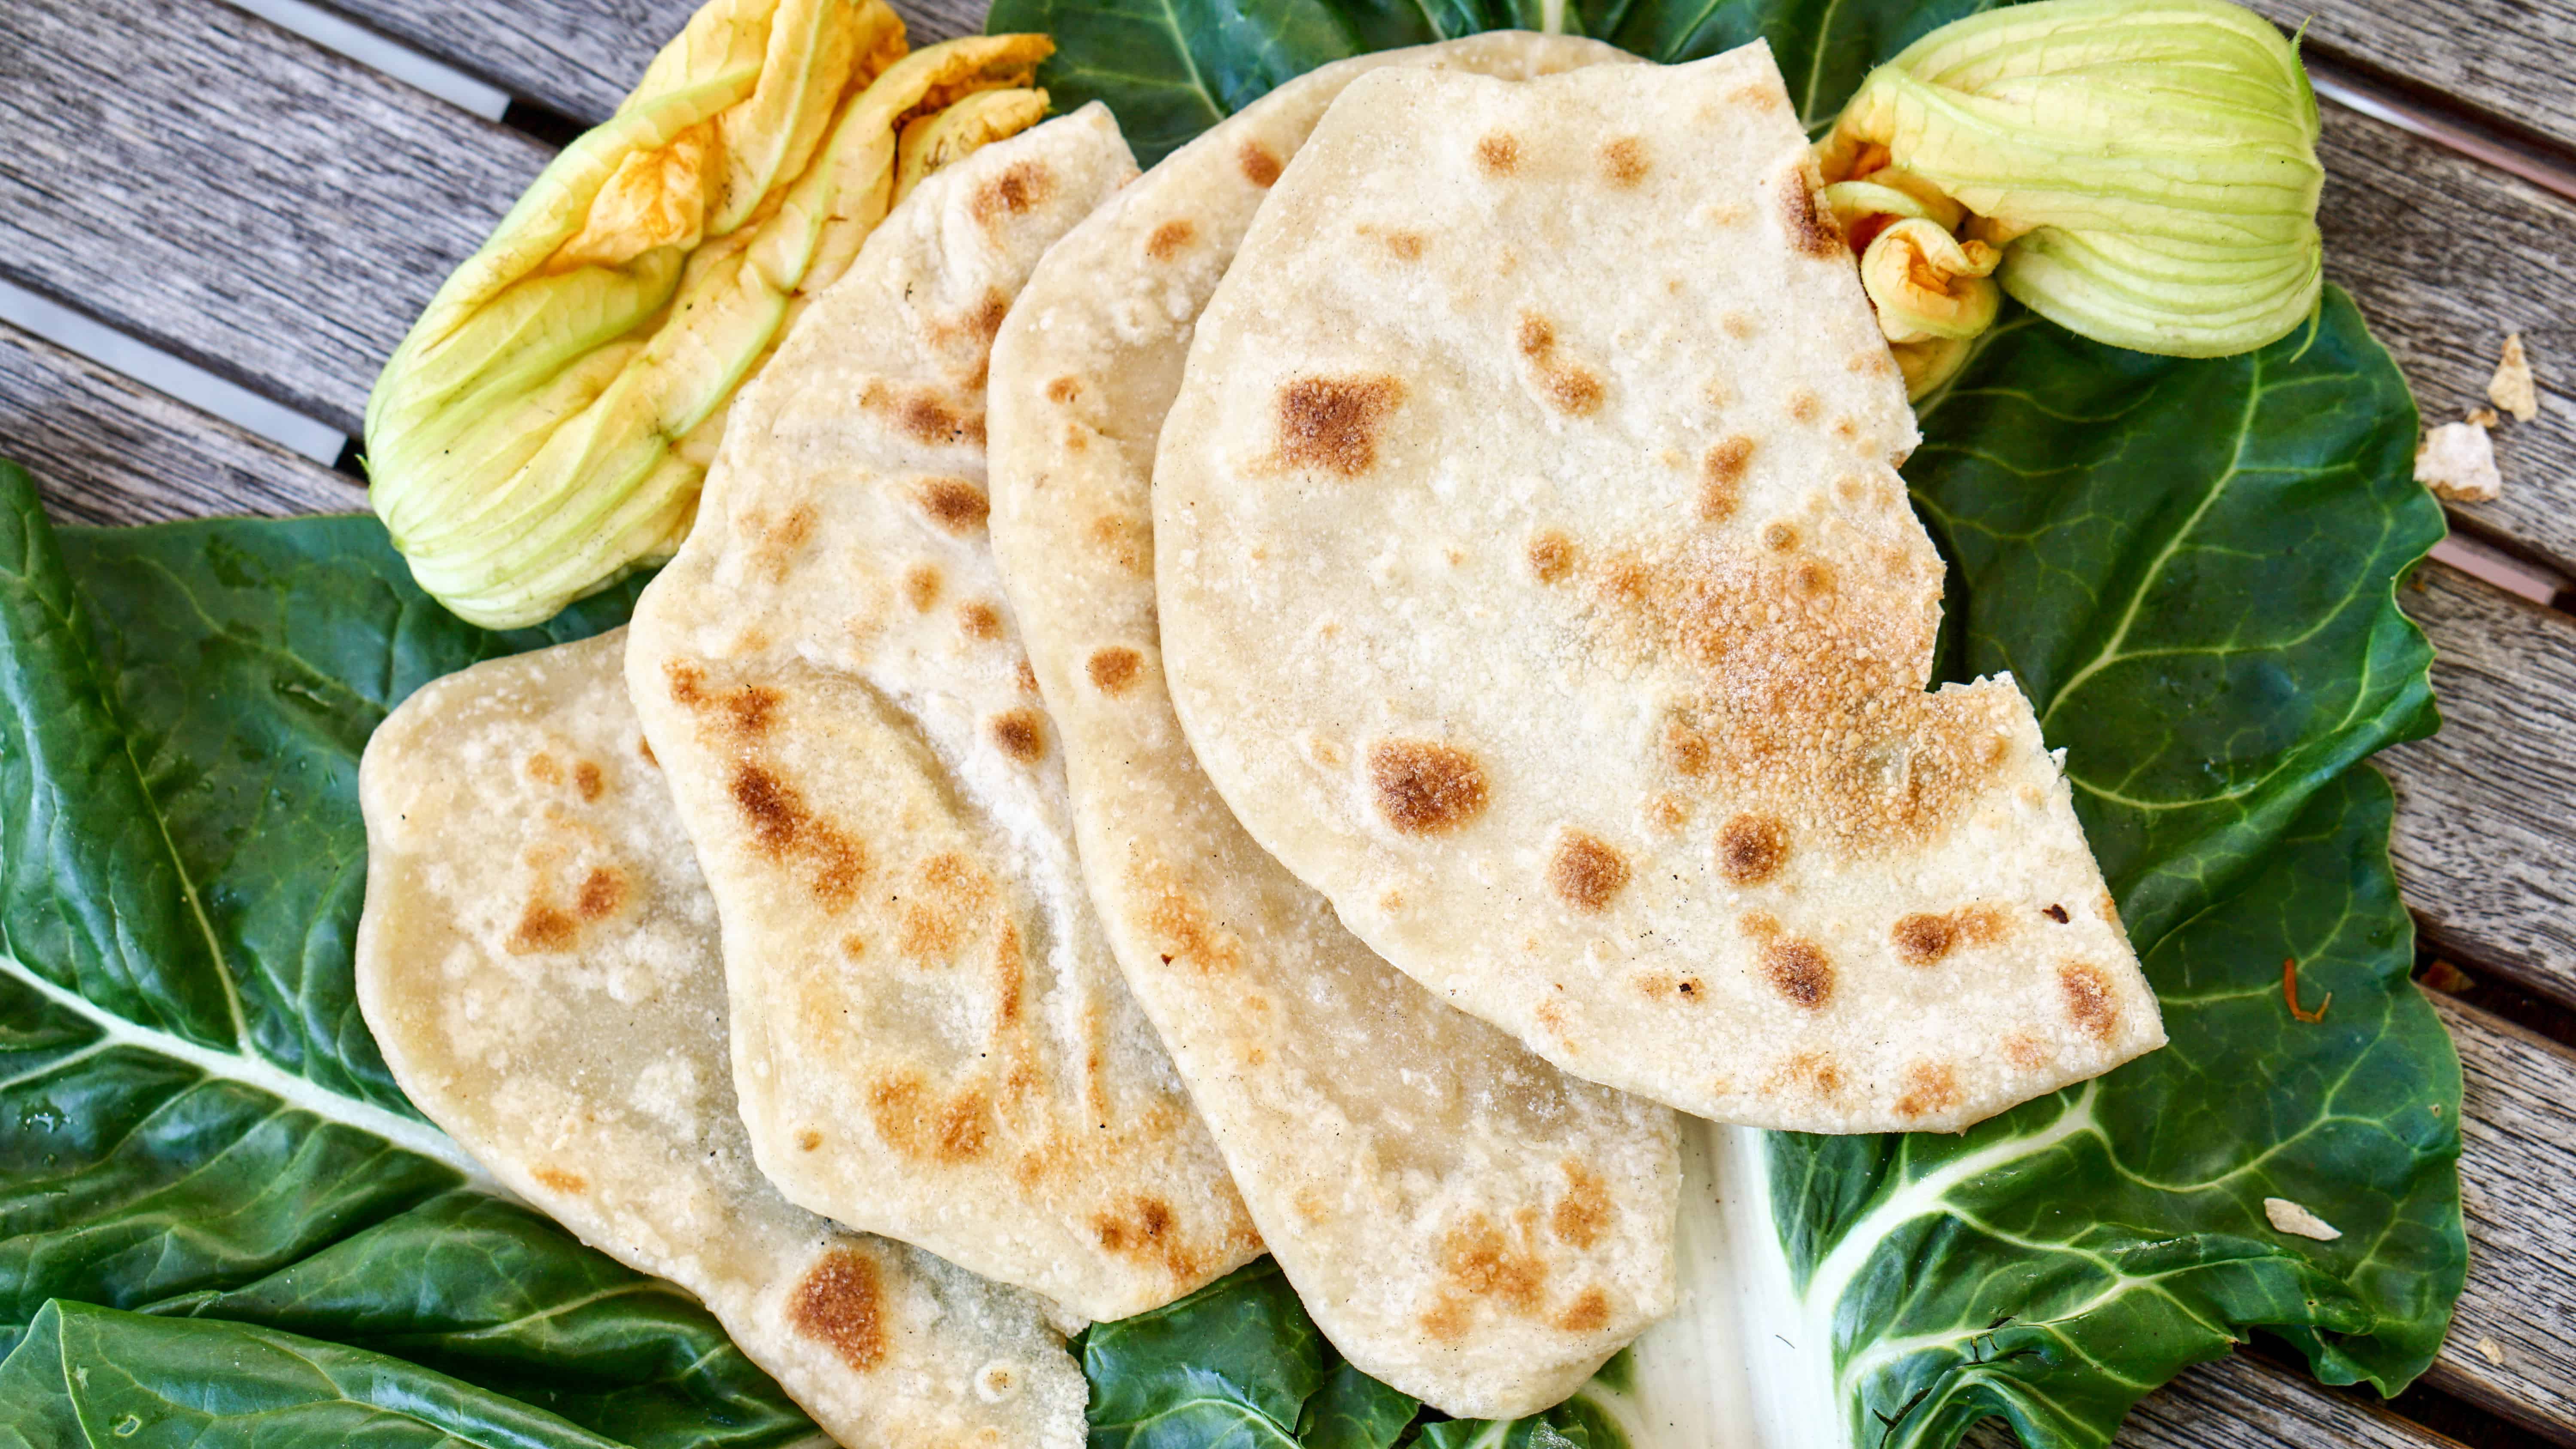 https://www.truefoodsblog.com/wp-content/uploads/2018/08/Indian-Chapati-Bread-by-Truefoodsblog.jpg